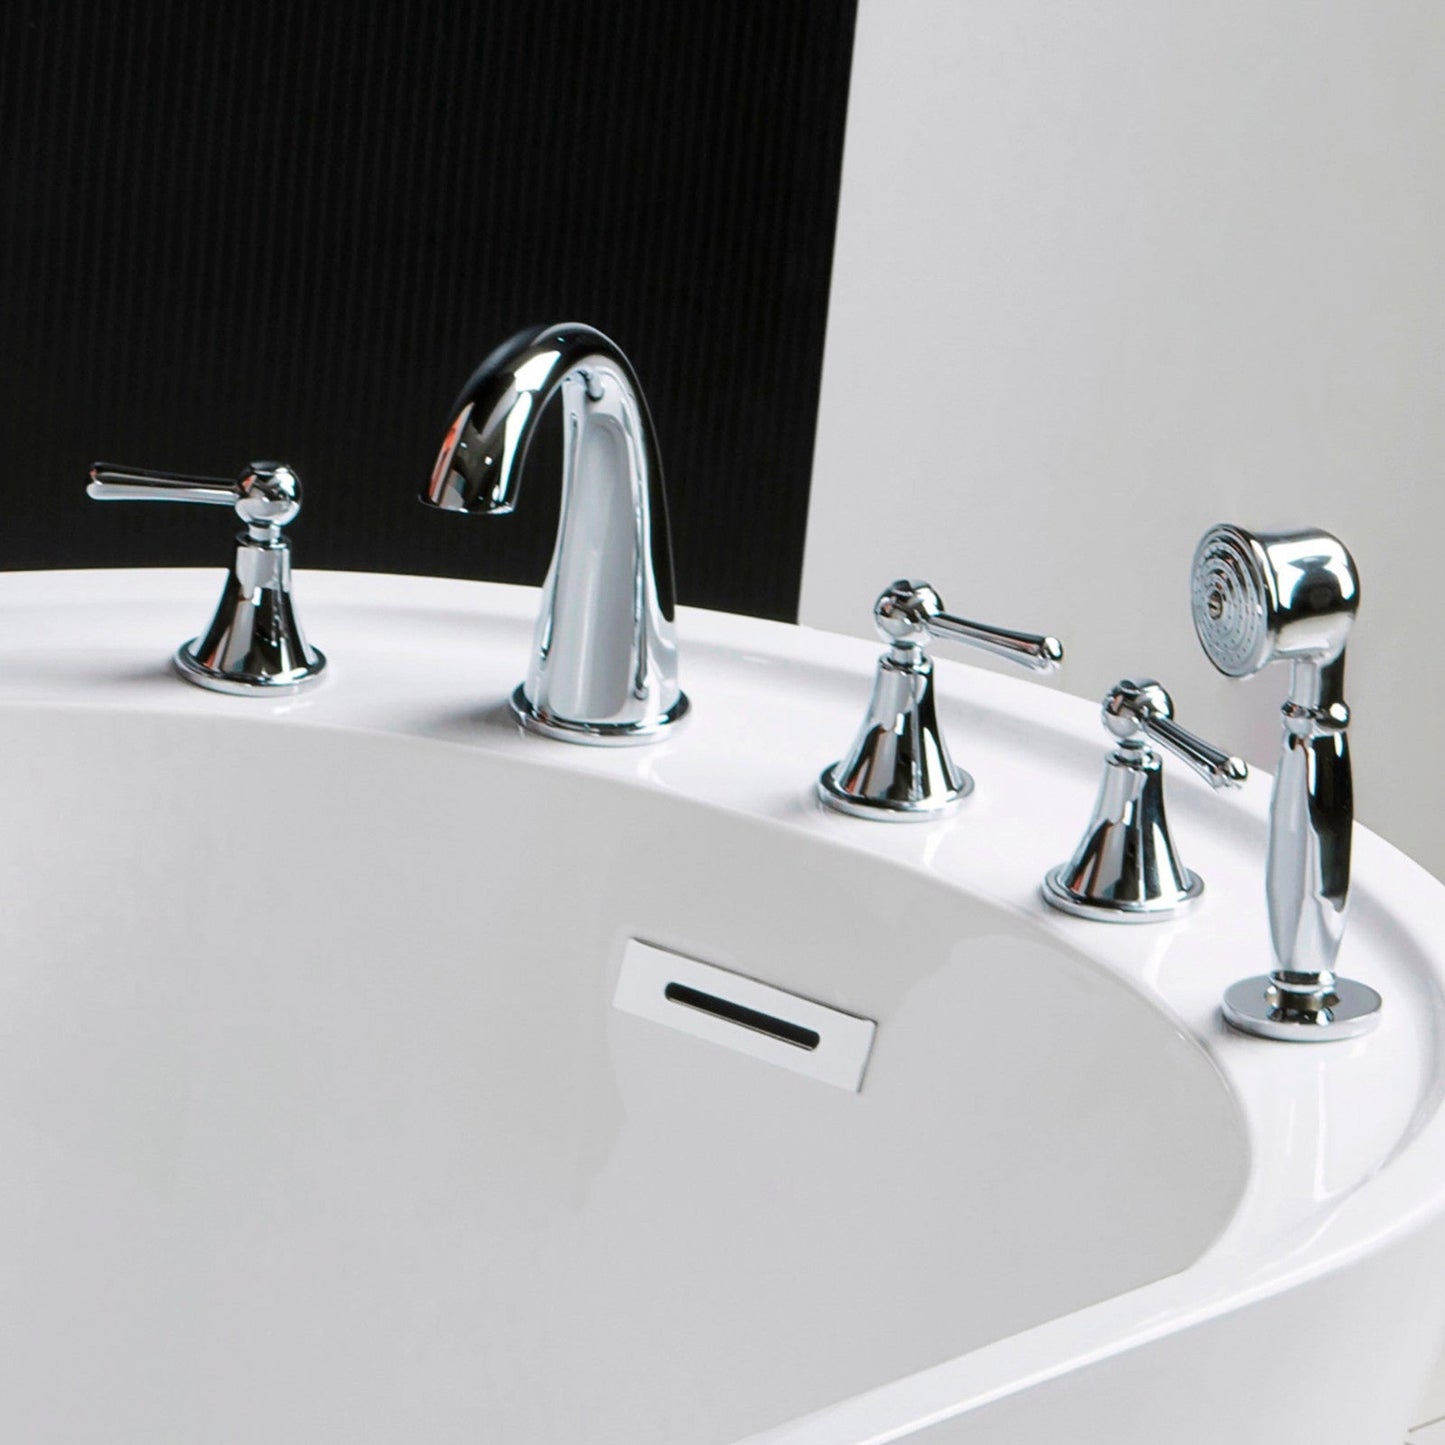 WoodBridge B0083 59" White Acrylic Freestanding Soaking Bathtub With Chrome Drain, Overflow, F0021 Tub Filler and Caddy Tray